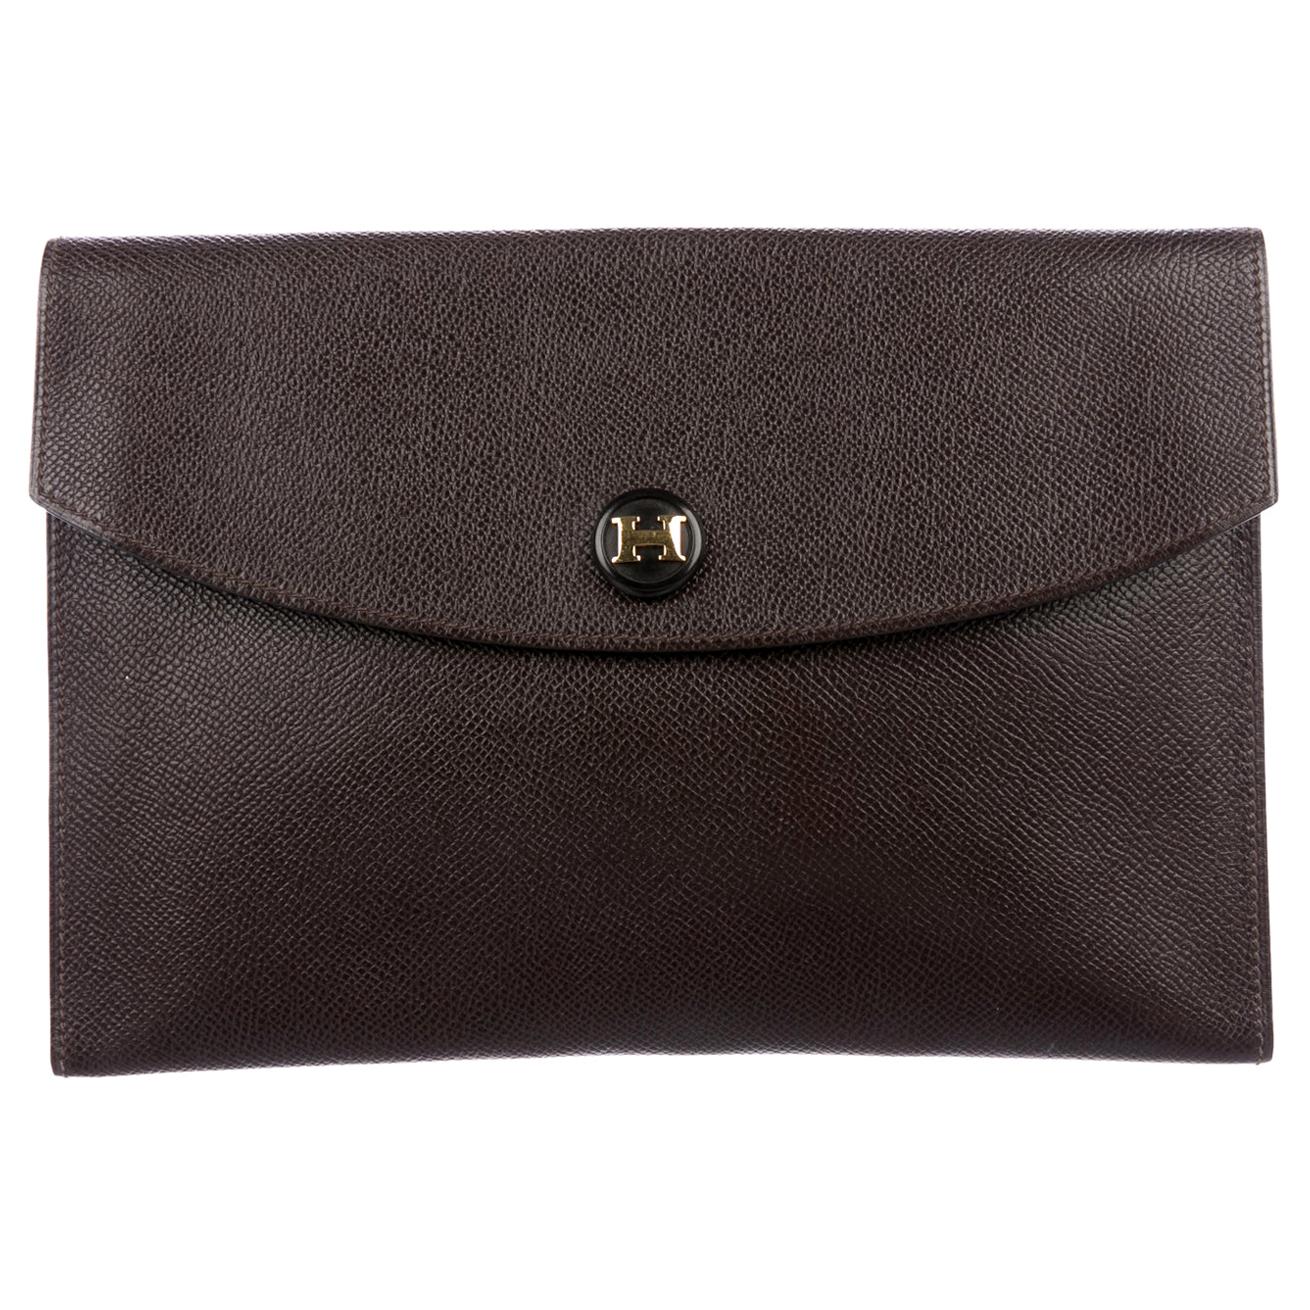 Hermes Dark Brown Leather Gold 'H' Logo Button Envelope Evening Clutch Bag